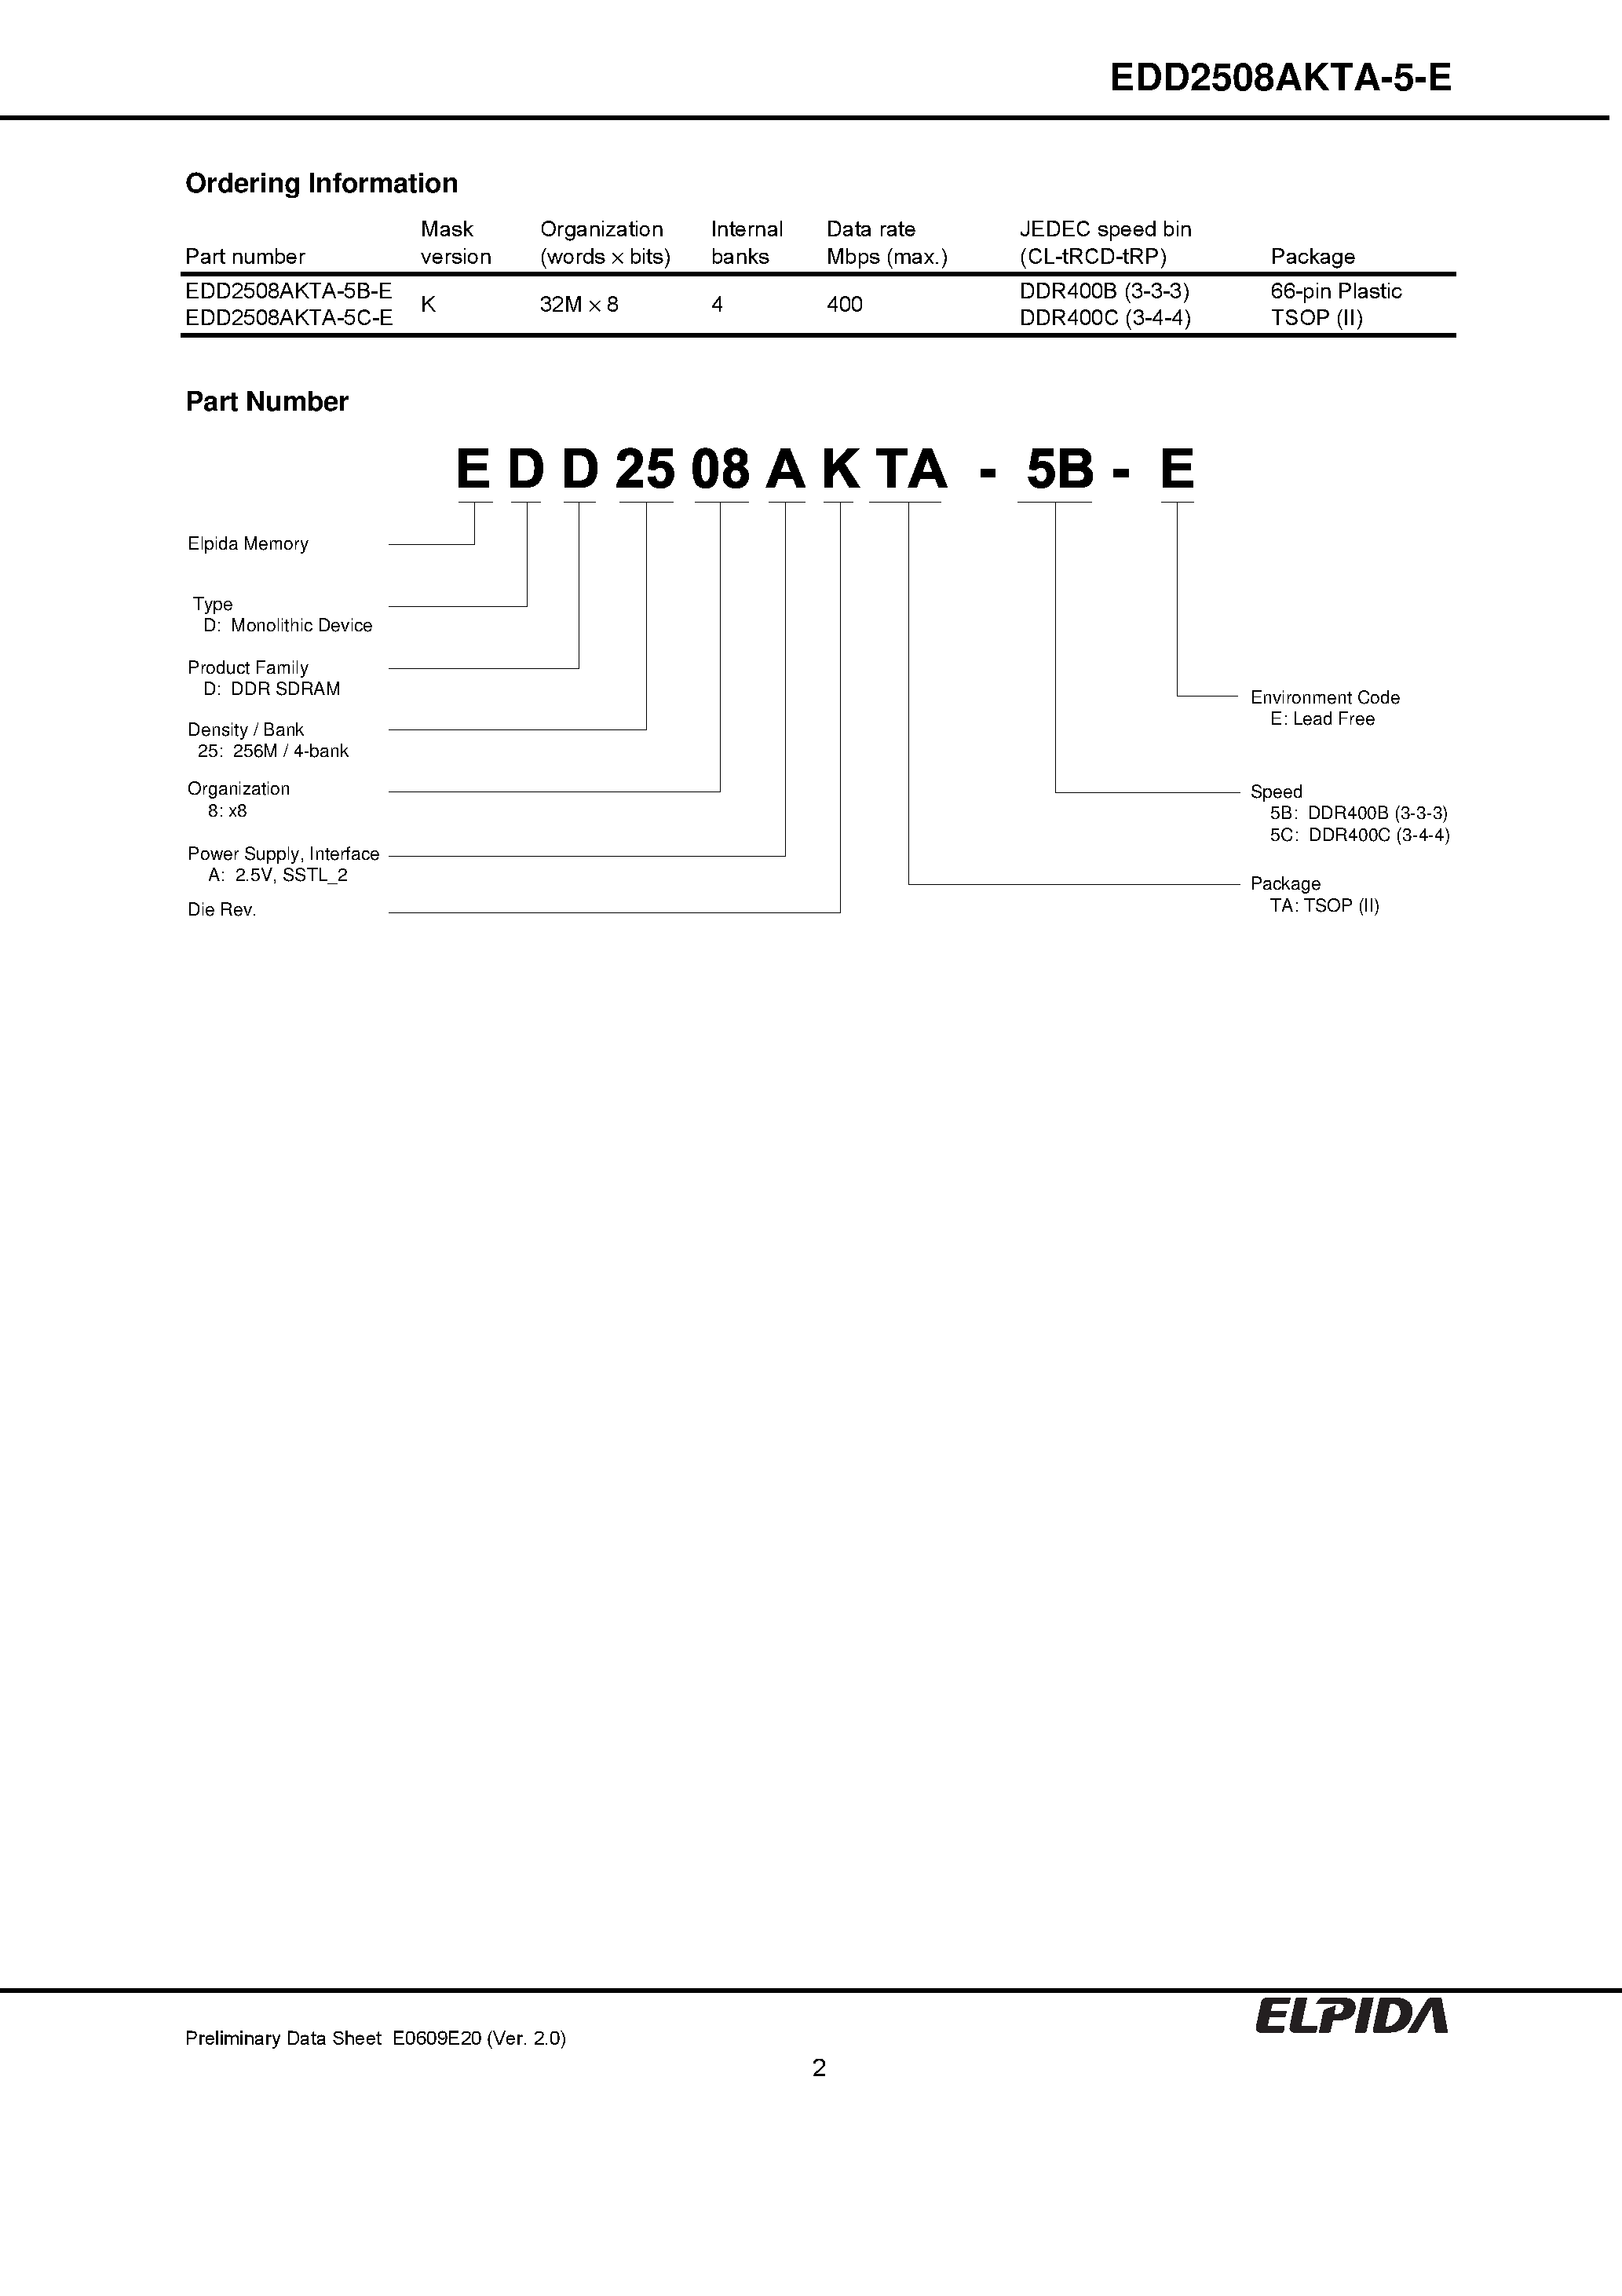 Datasheet EDD2508AKTA-5-E - 256M bits DDR SDRAM (32M words x 8 bits DDR400) page 2